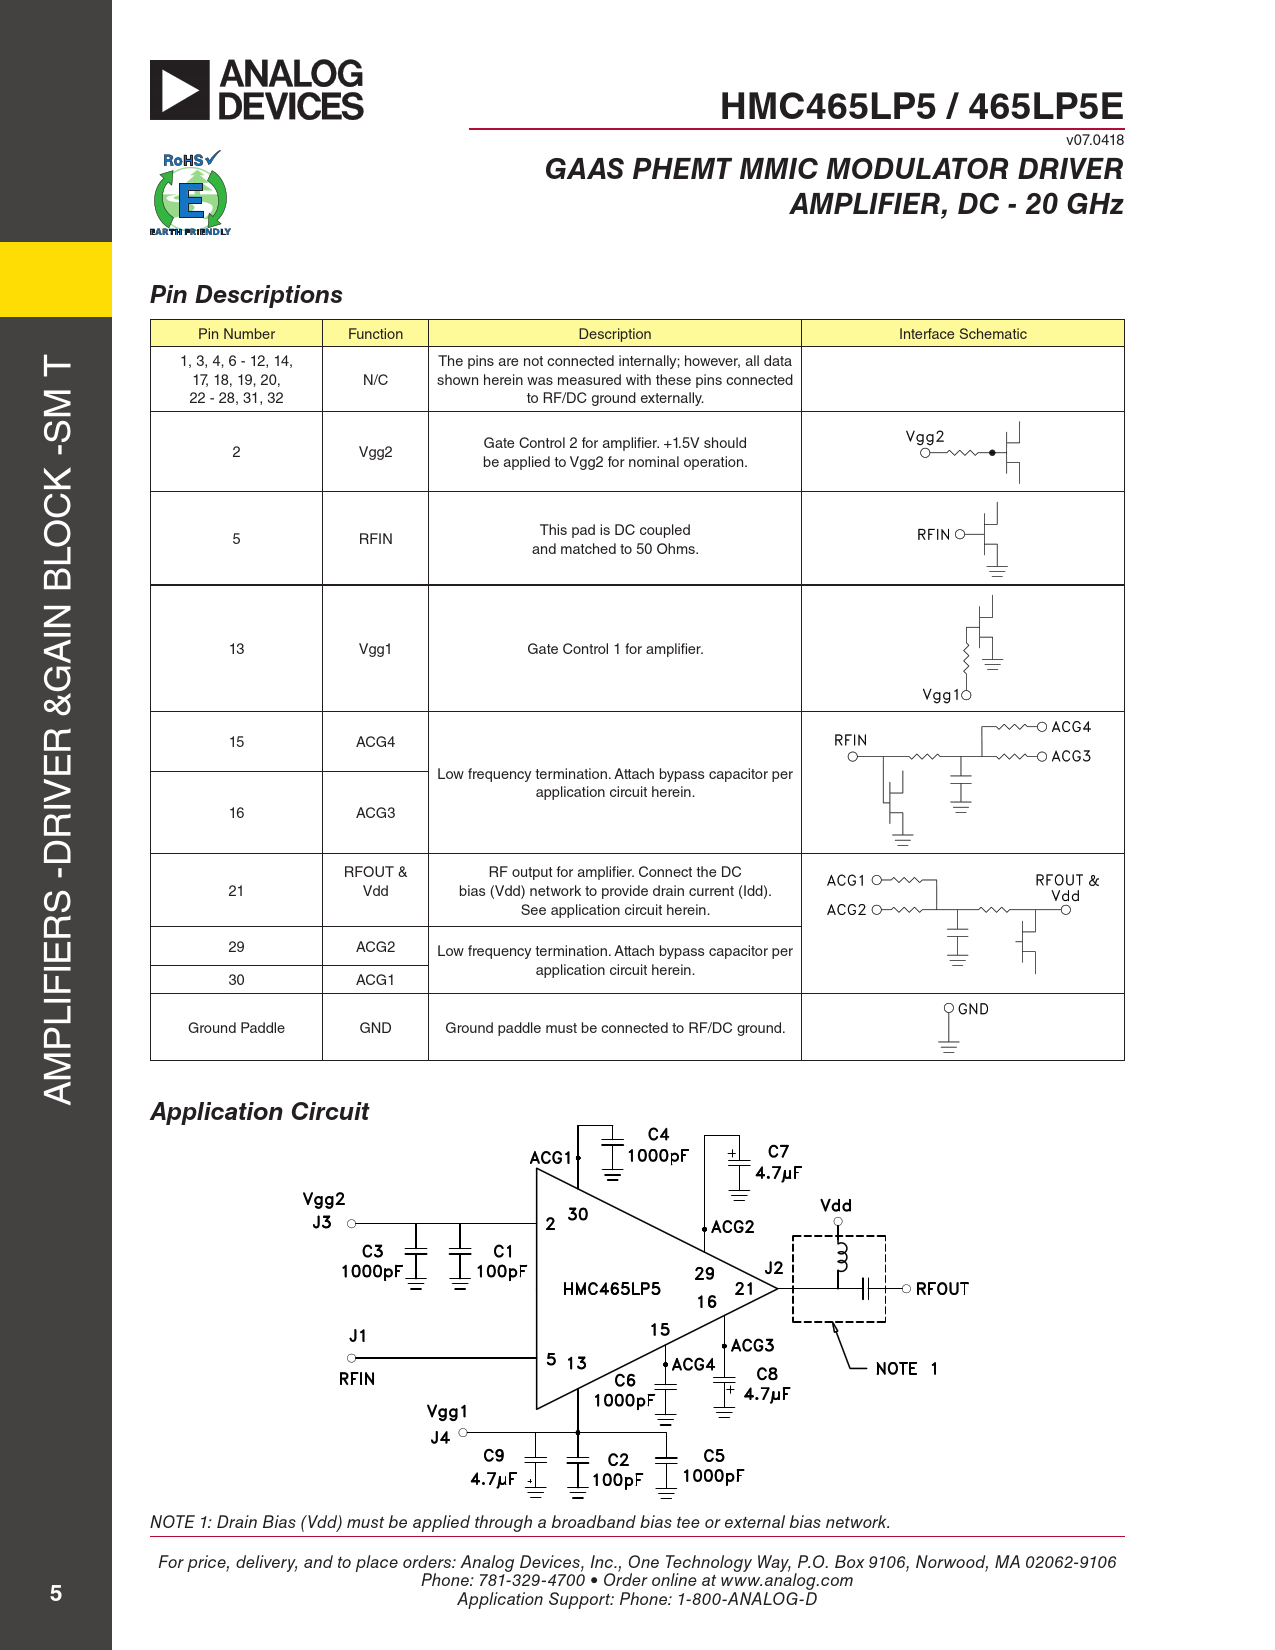 HMC465LP5 / 465LP5E GAAS PHEMT MMIC MODULATOR DRIVER AMPLIFIER, DC - 20 GHz Pin Descriptions Application Circuit